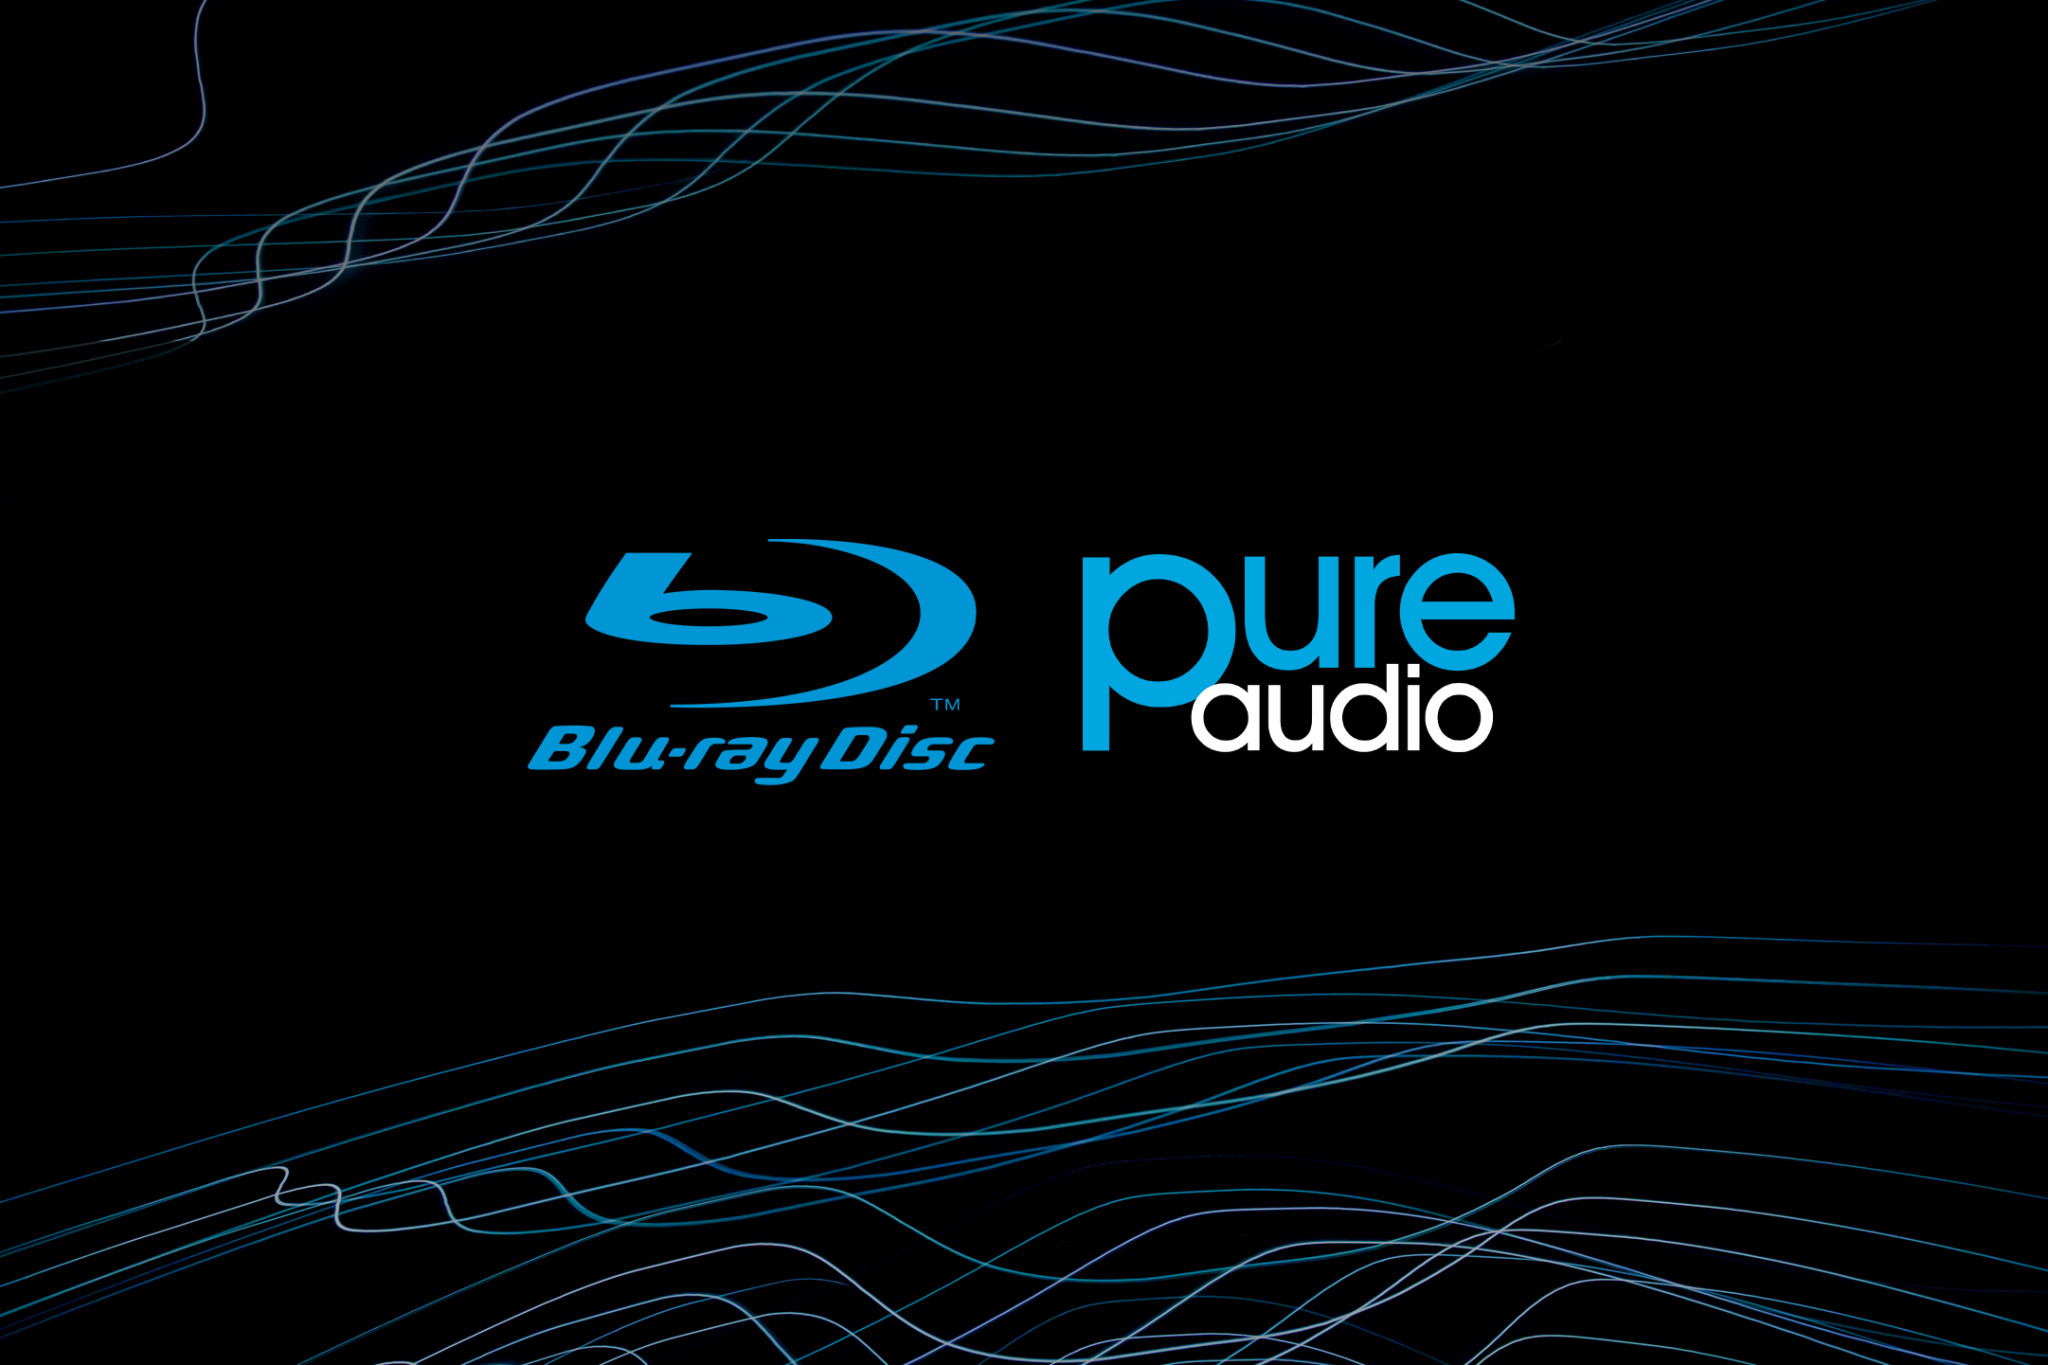 Blu-ray audio